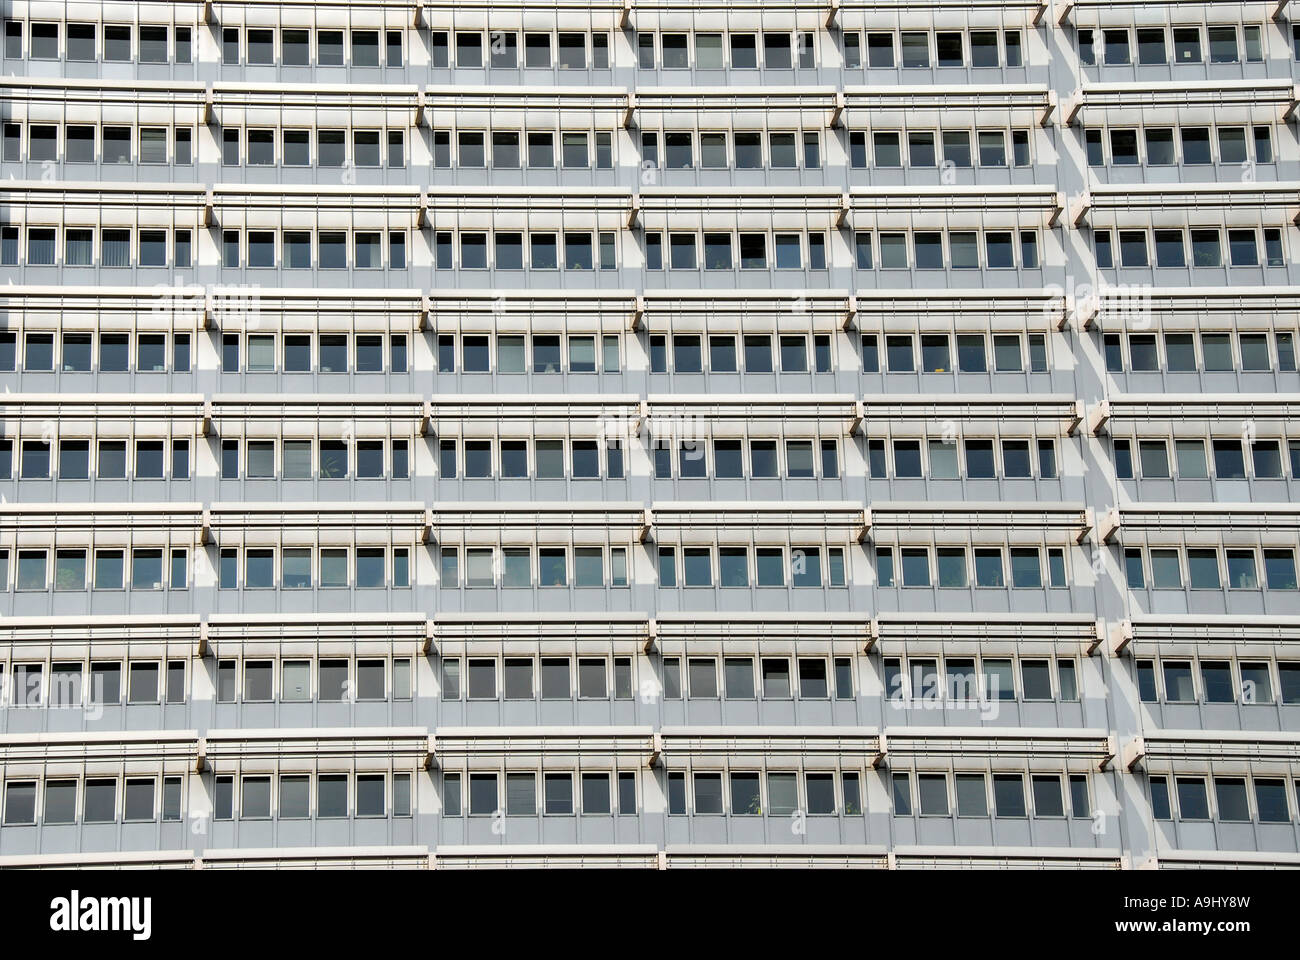 Appartements de style socialiste vivant Sulky Berliner Zeitung Berlin Allemagne Banque D'Images